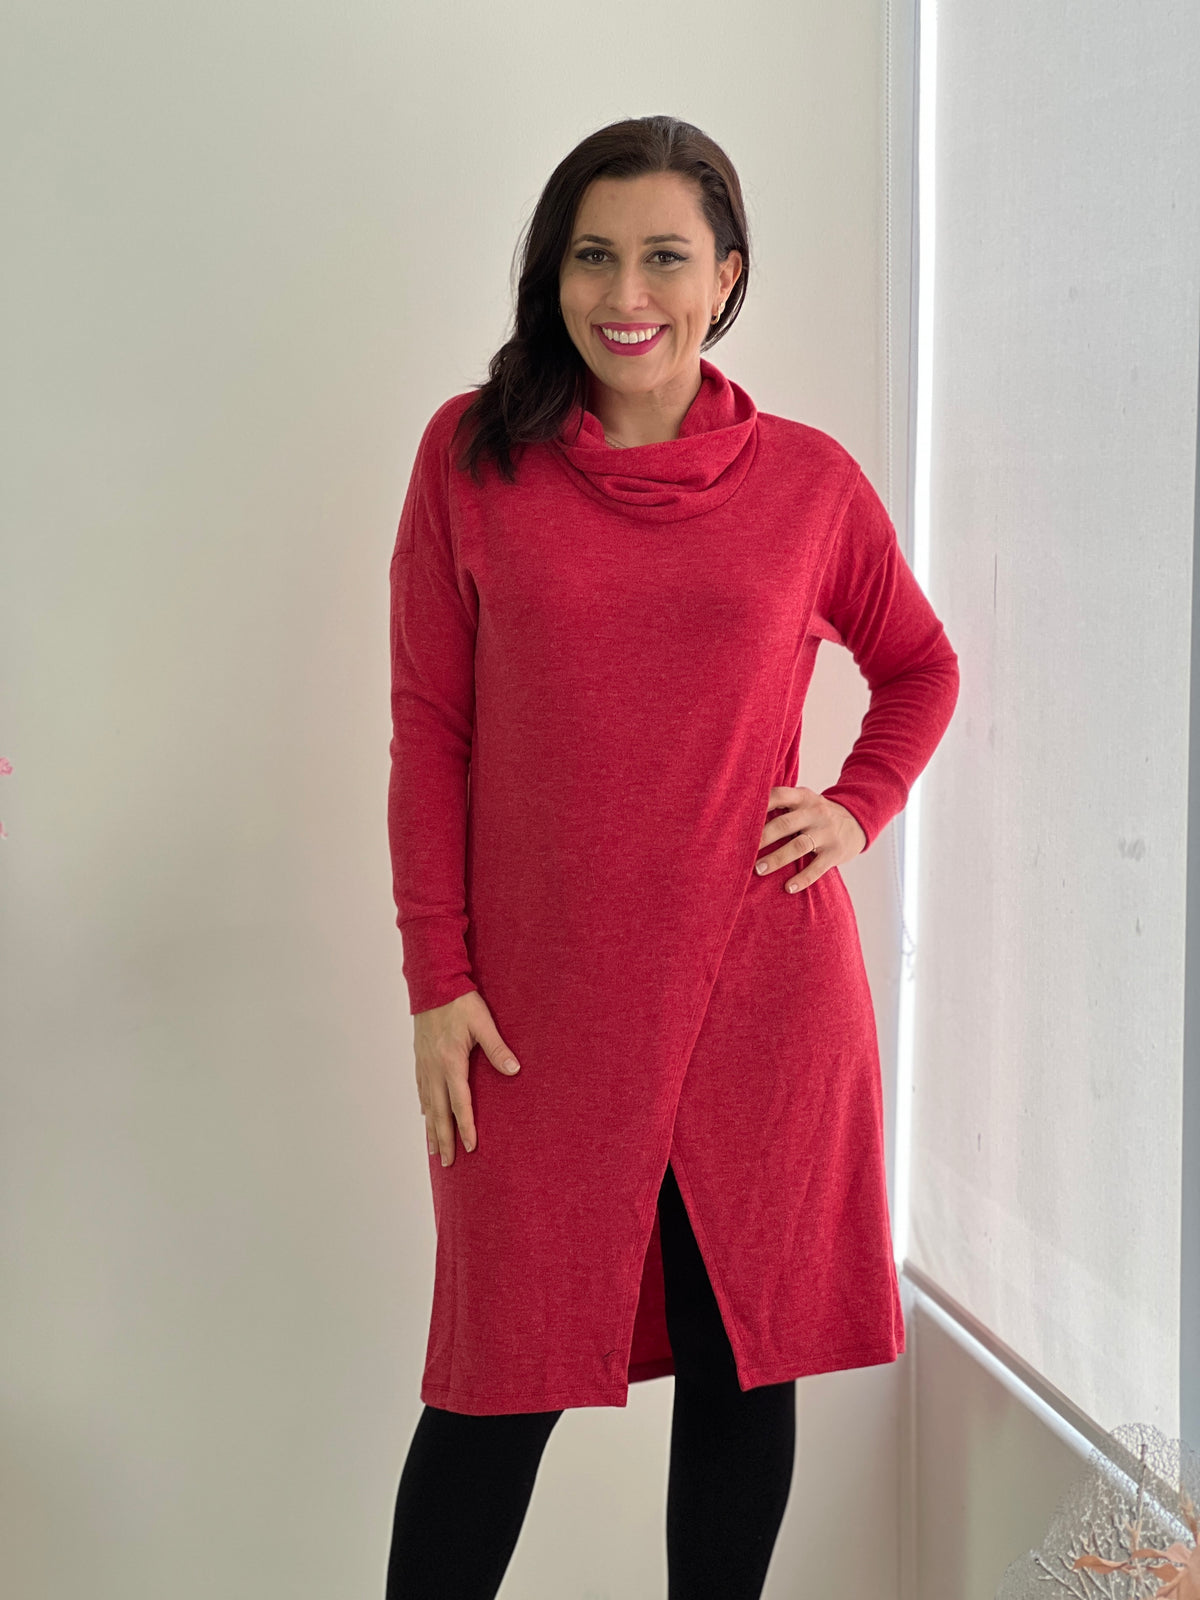 Whitney Red Knit Dress